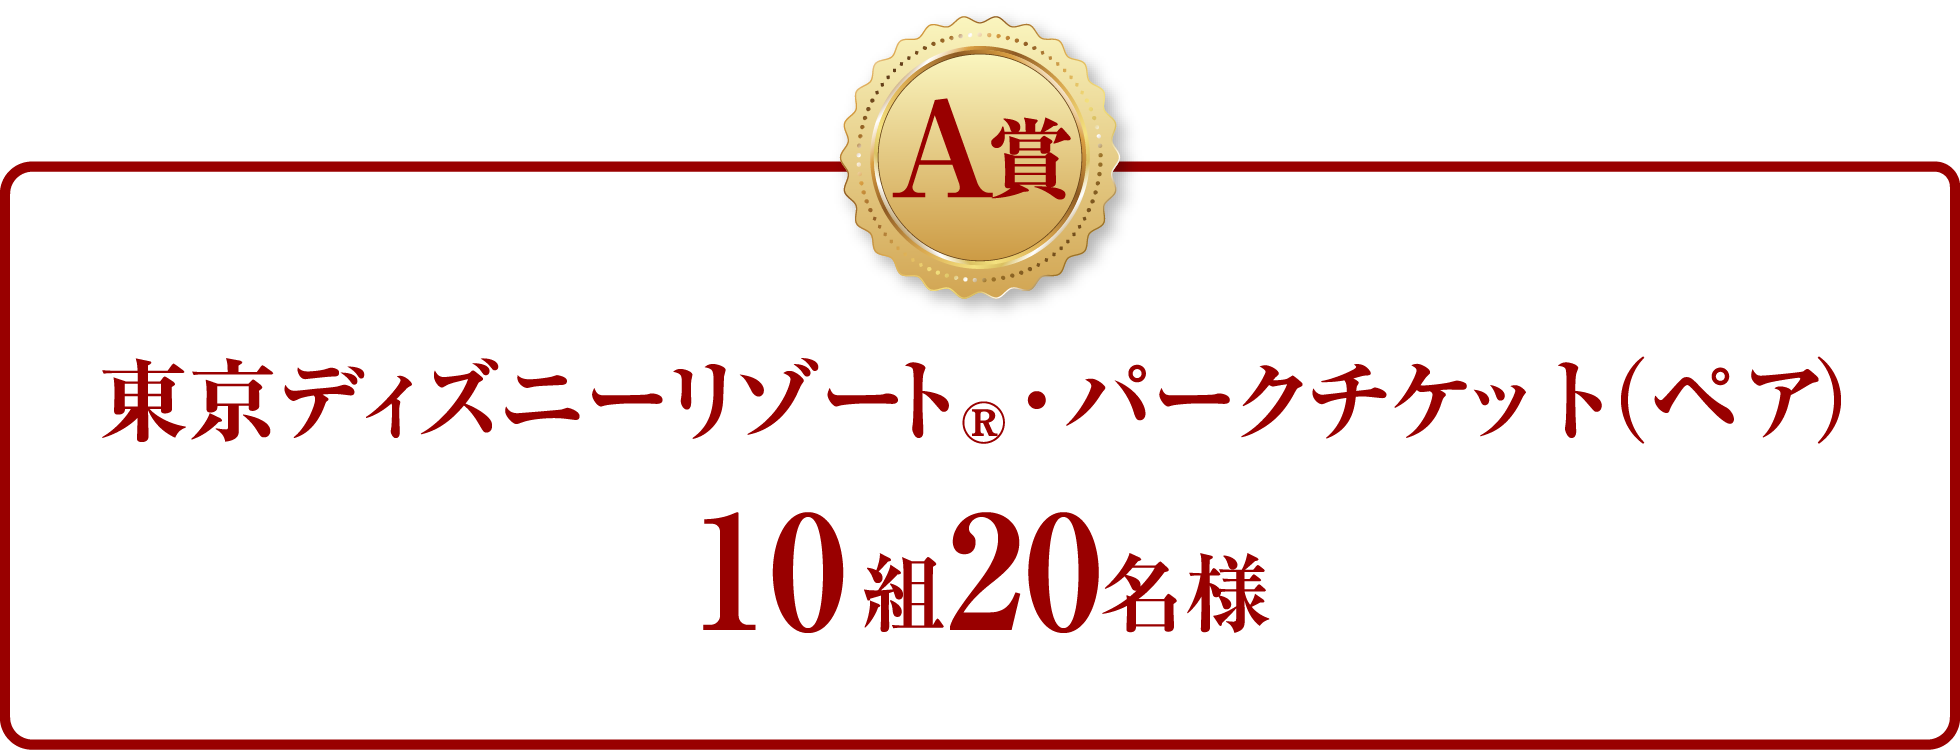 A賞 東京ディズニーリゾートR・パークチケット(ペア)  10組20名様